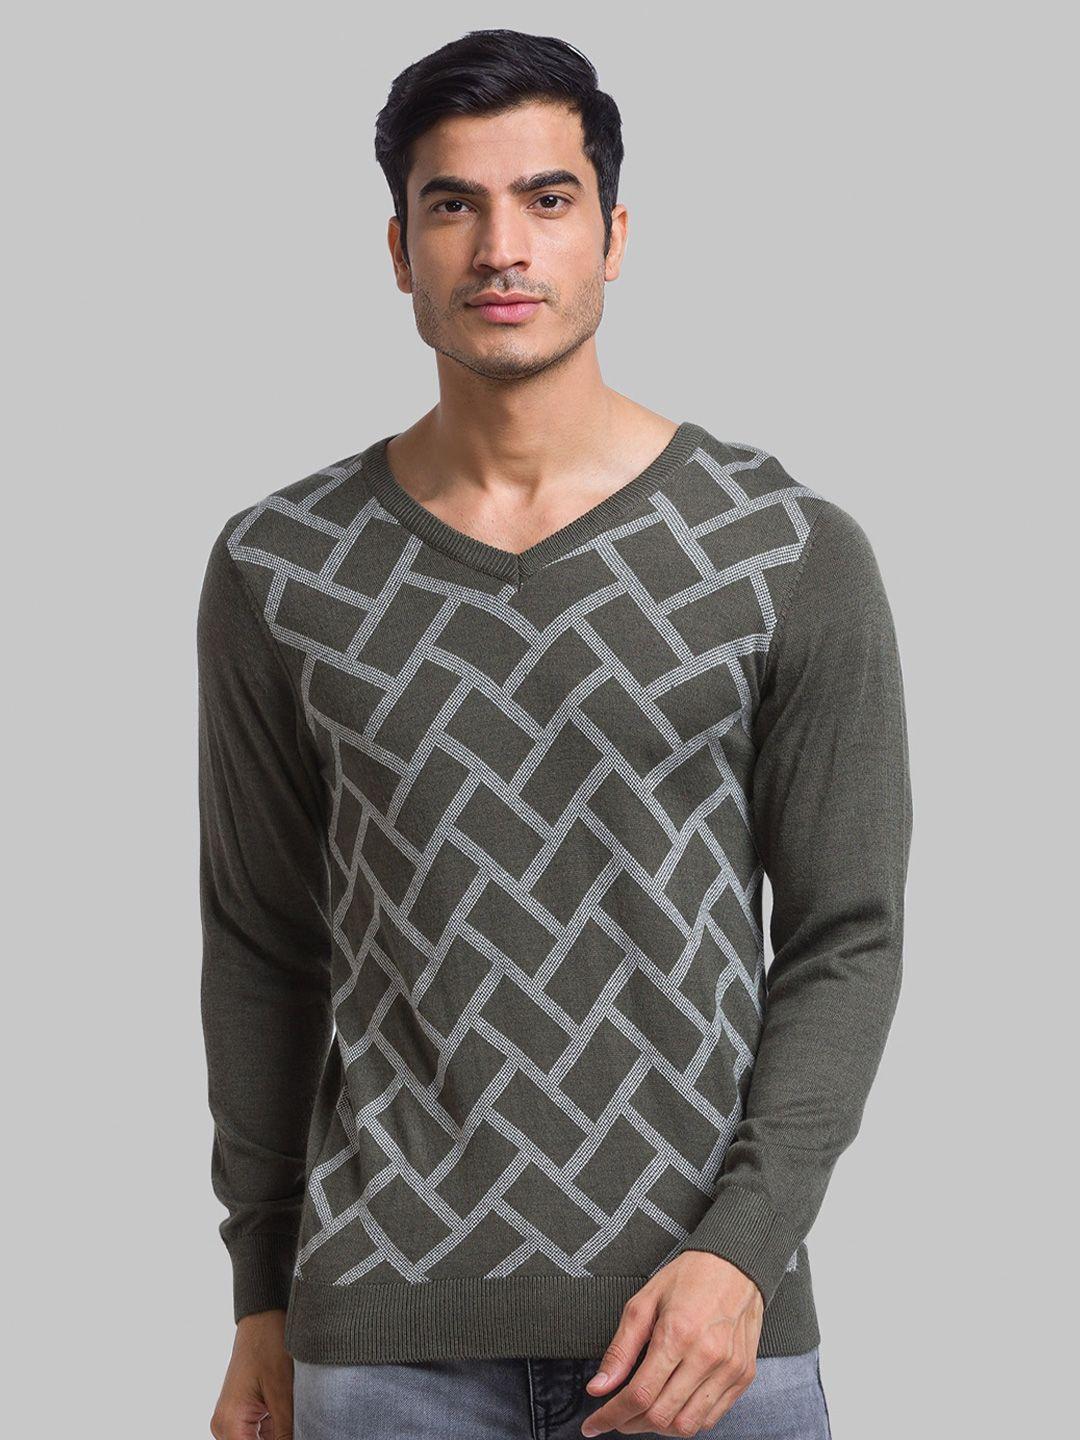 Parx Men Chevron Printed Acrylic Cardigan Sweater